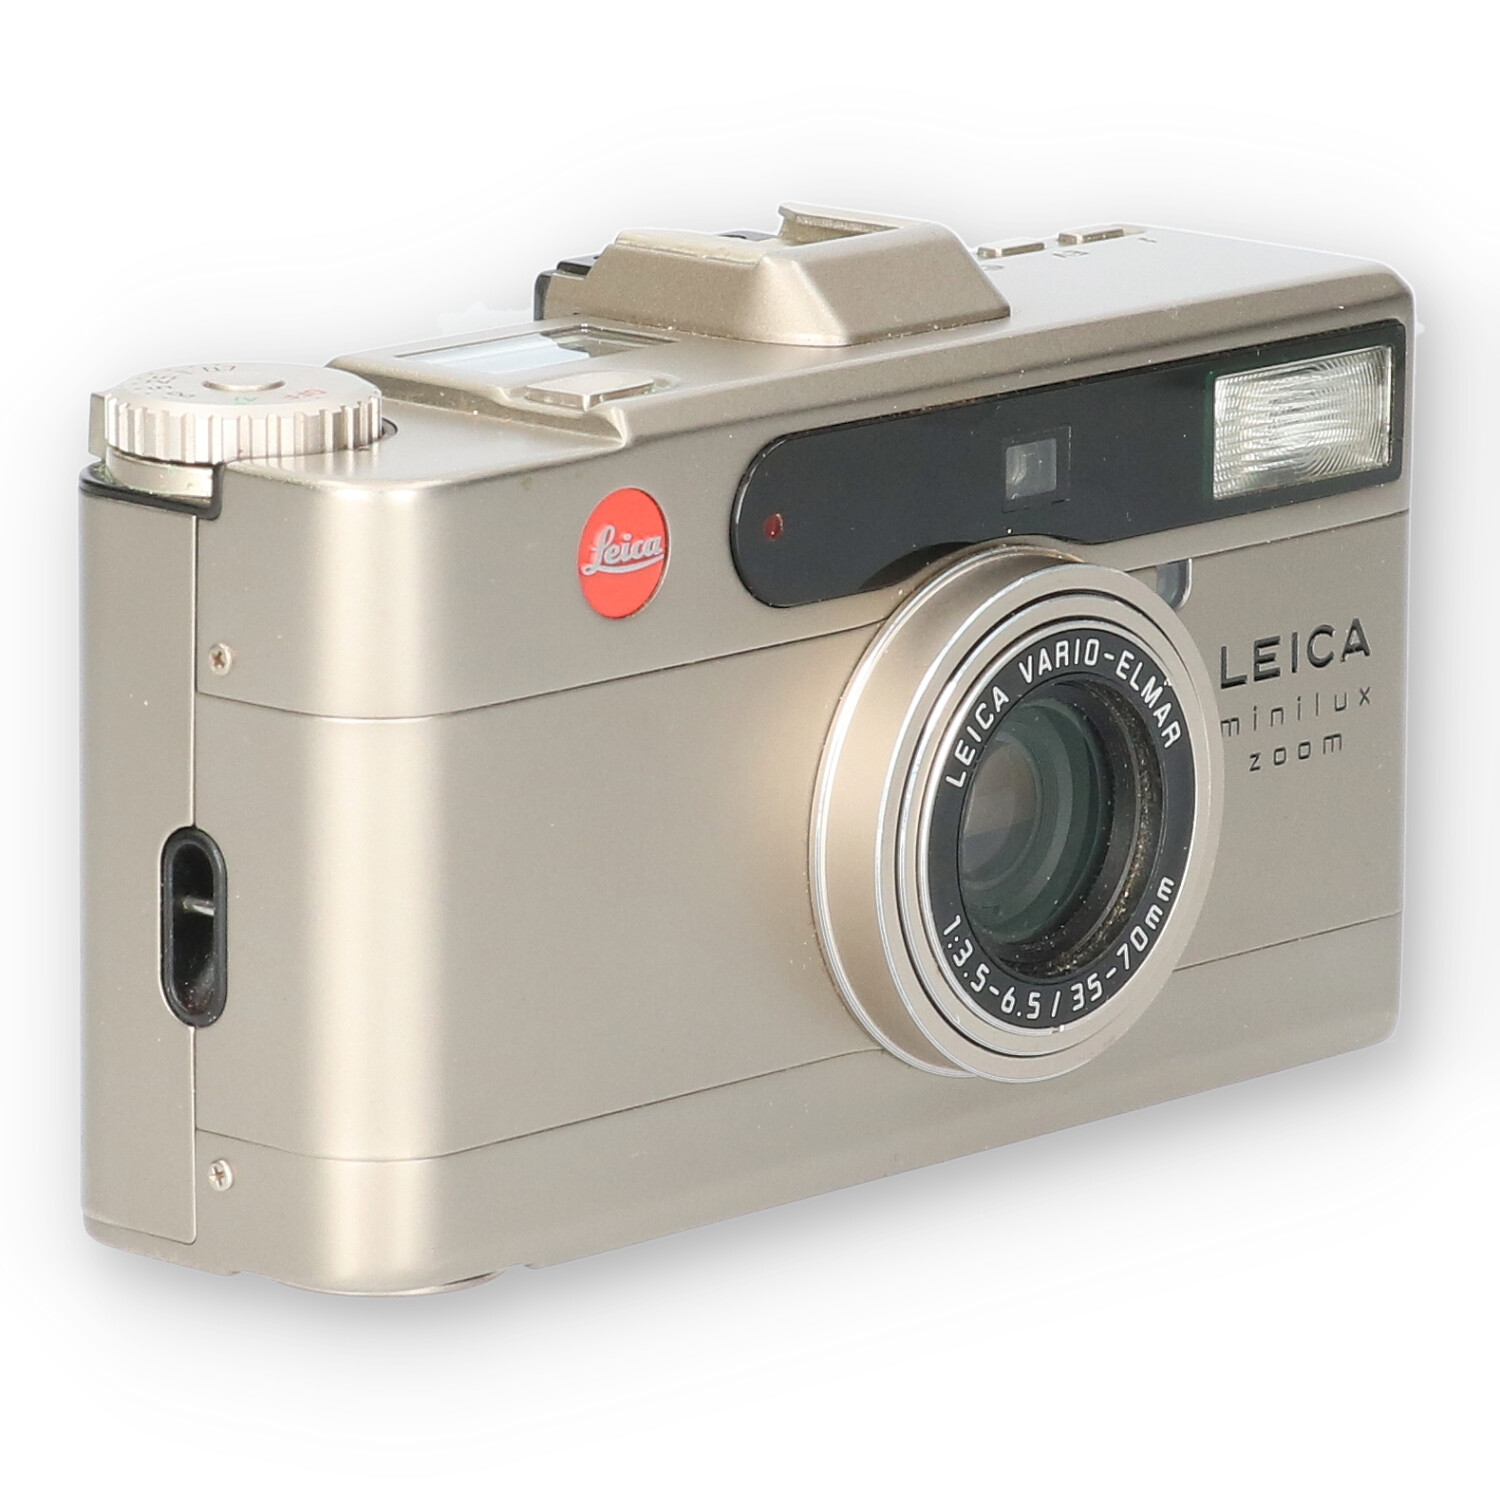 Leica Minilux Zoom - No-Digital